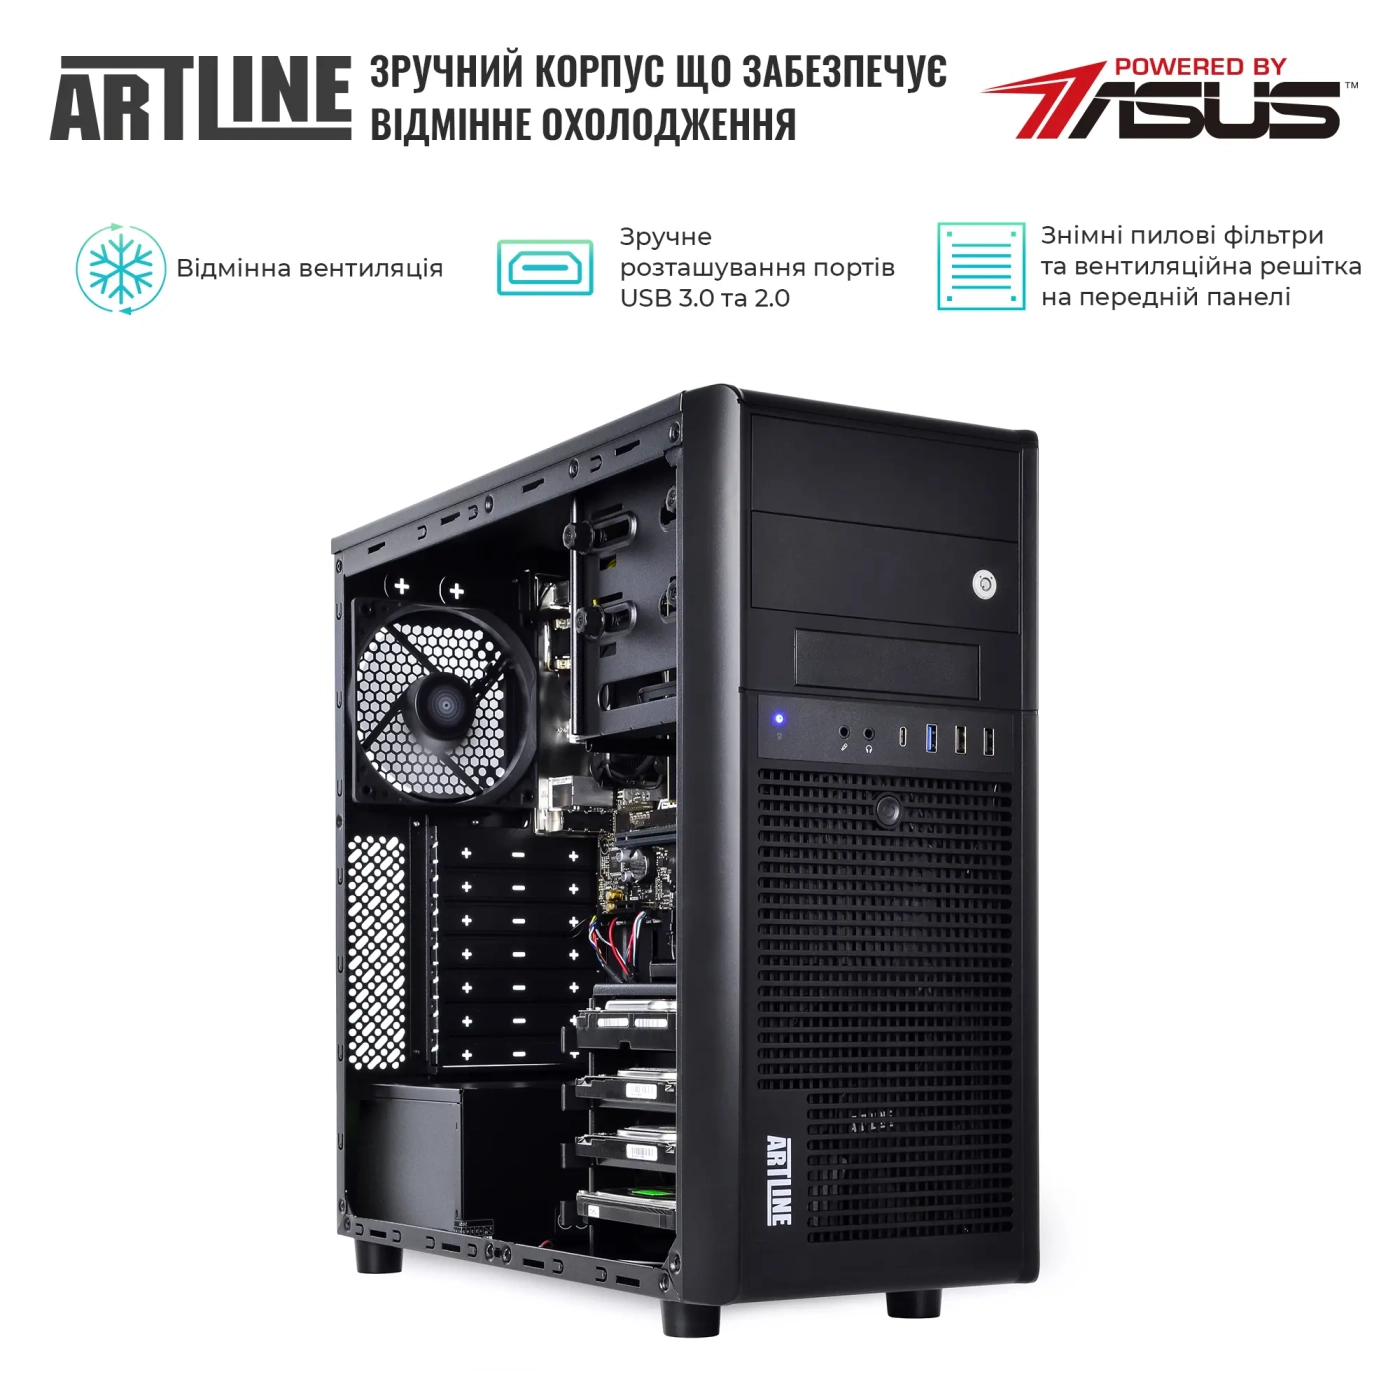 Купити Сервер ARTLINE Business T37 (T37v38) - фото 3